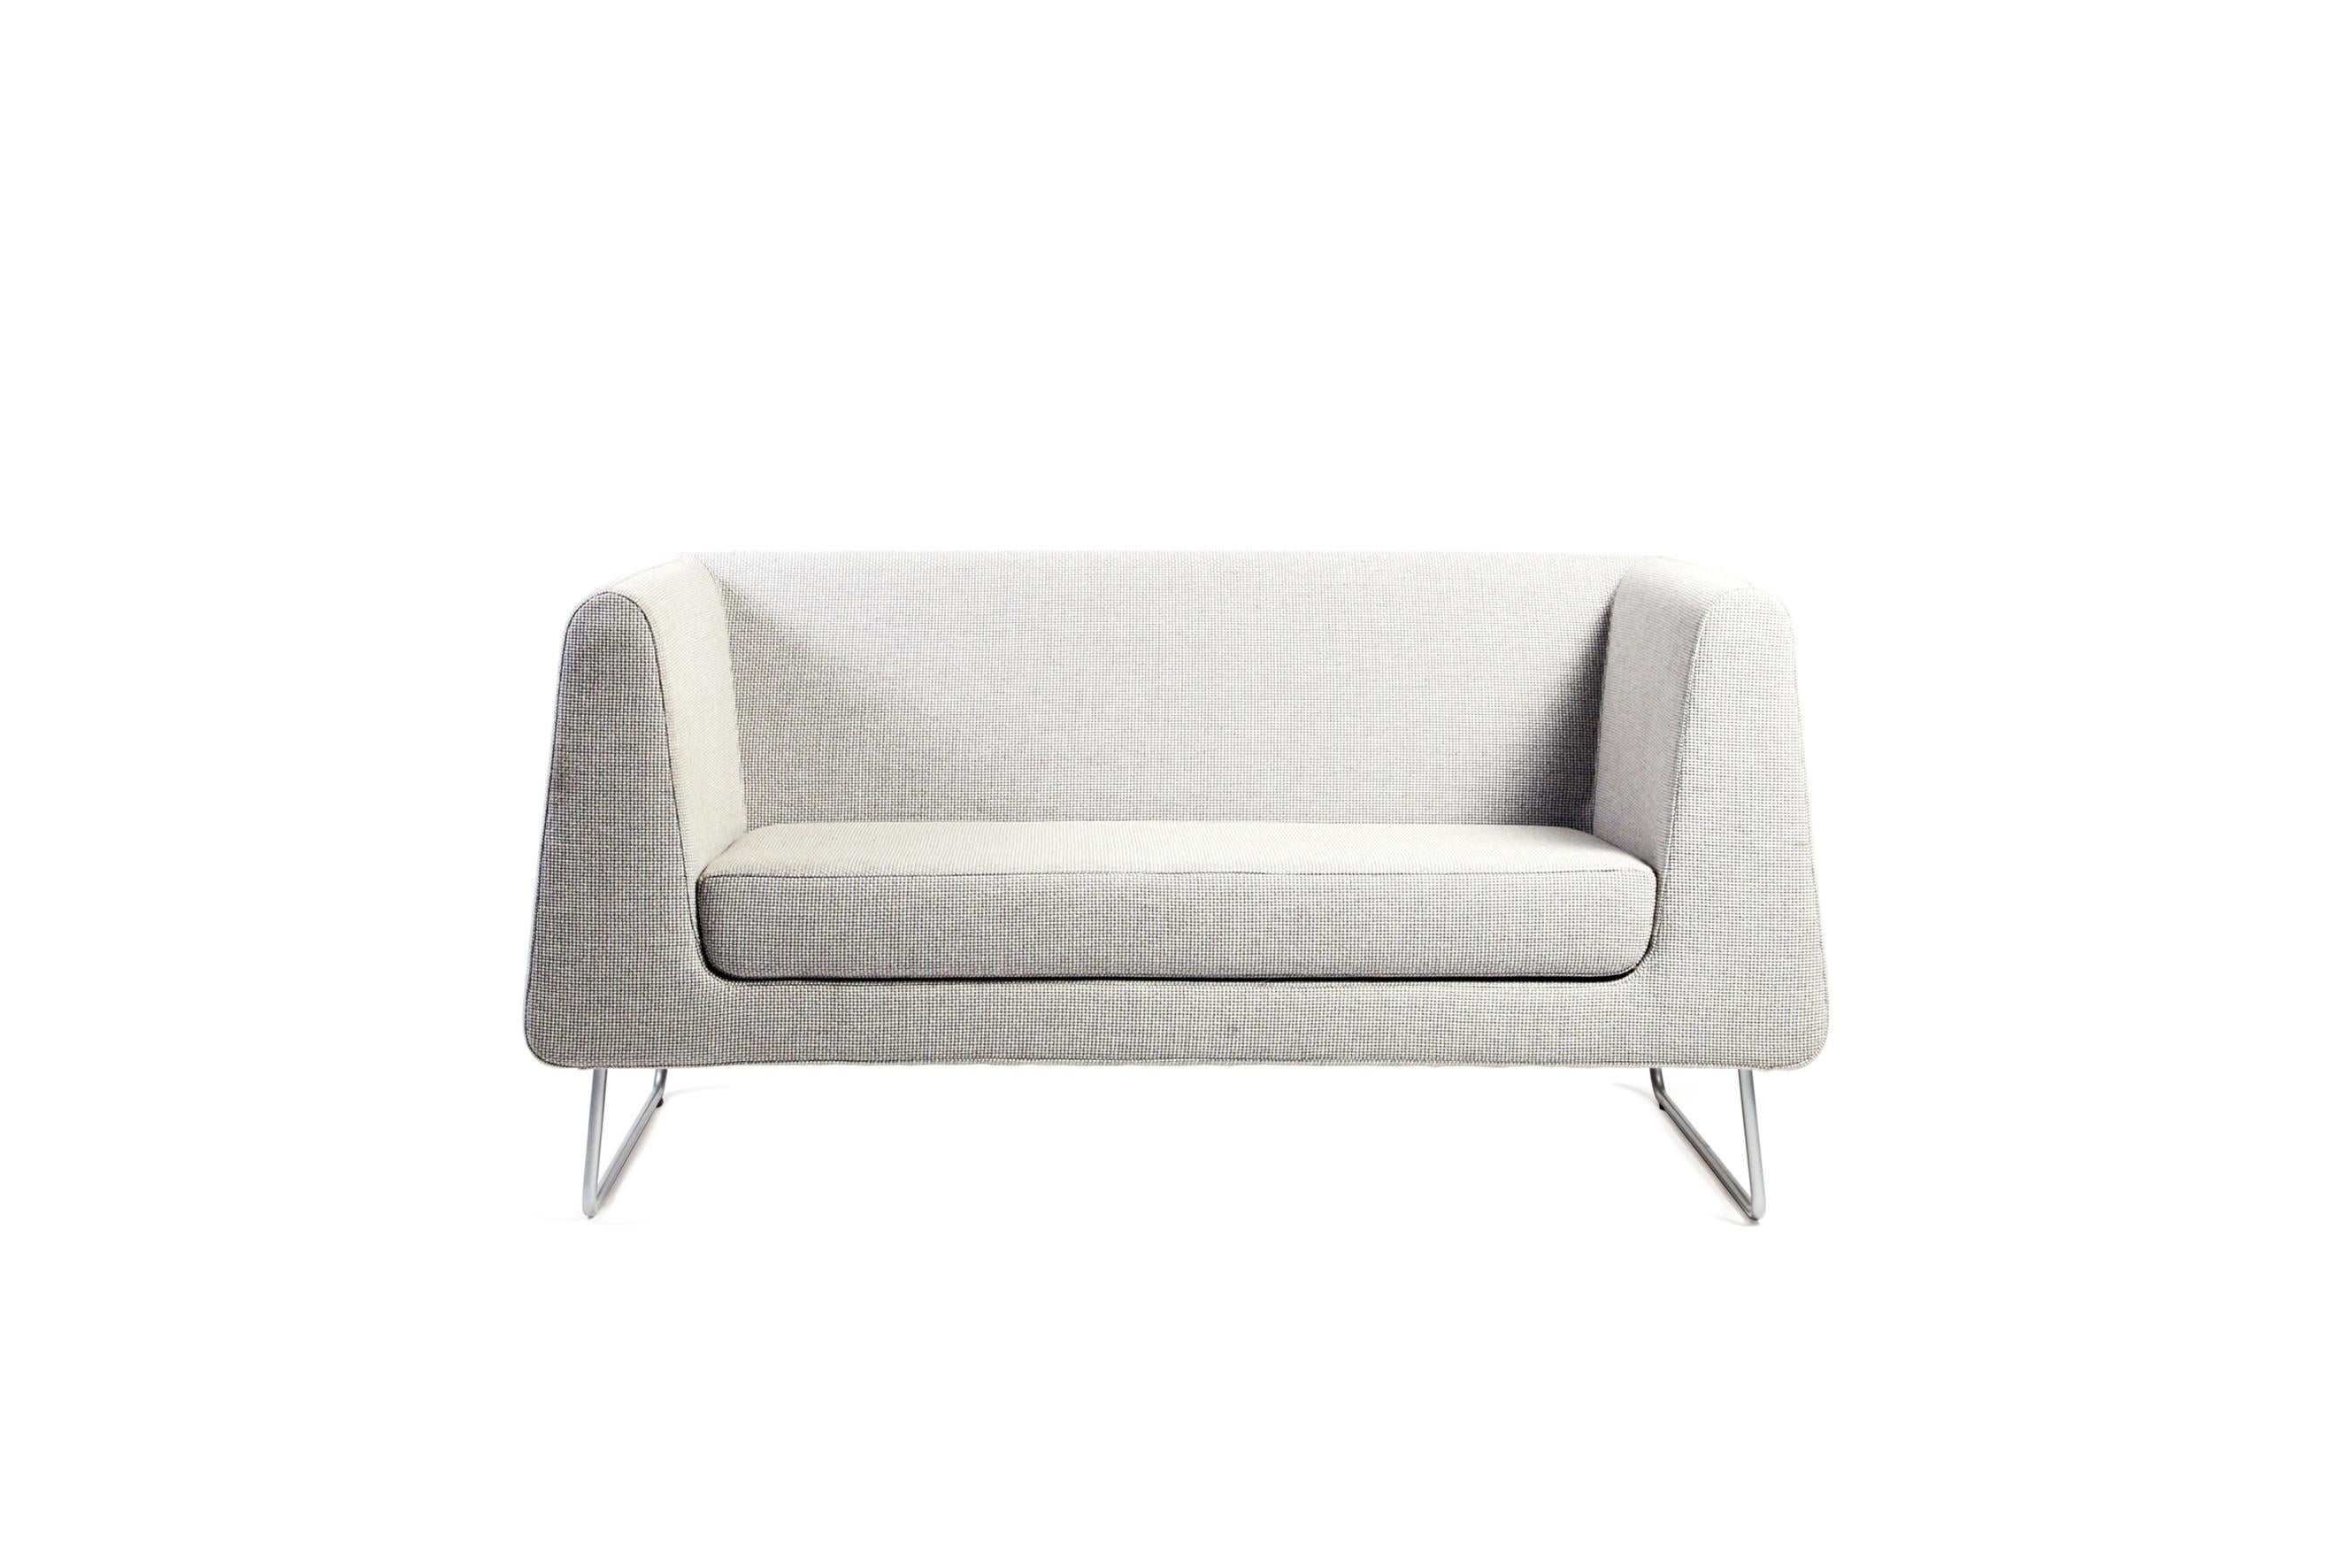 Inno Jarman Sofa Designed by Steinar Hindenes 1